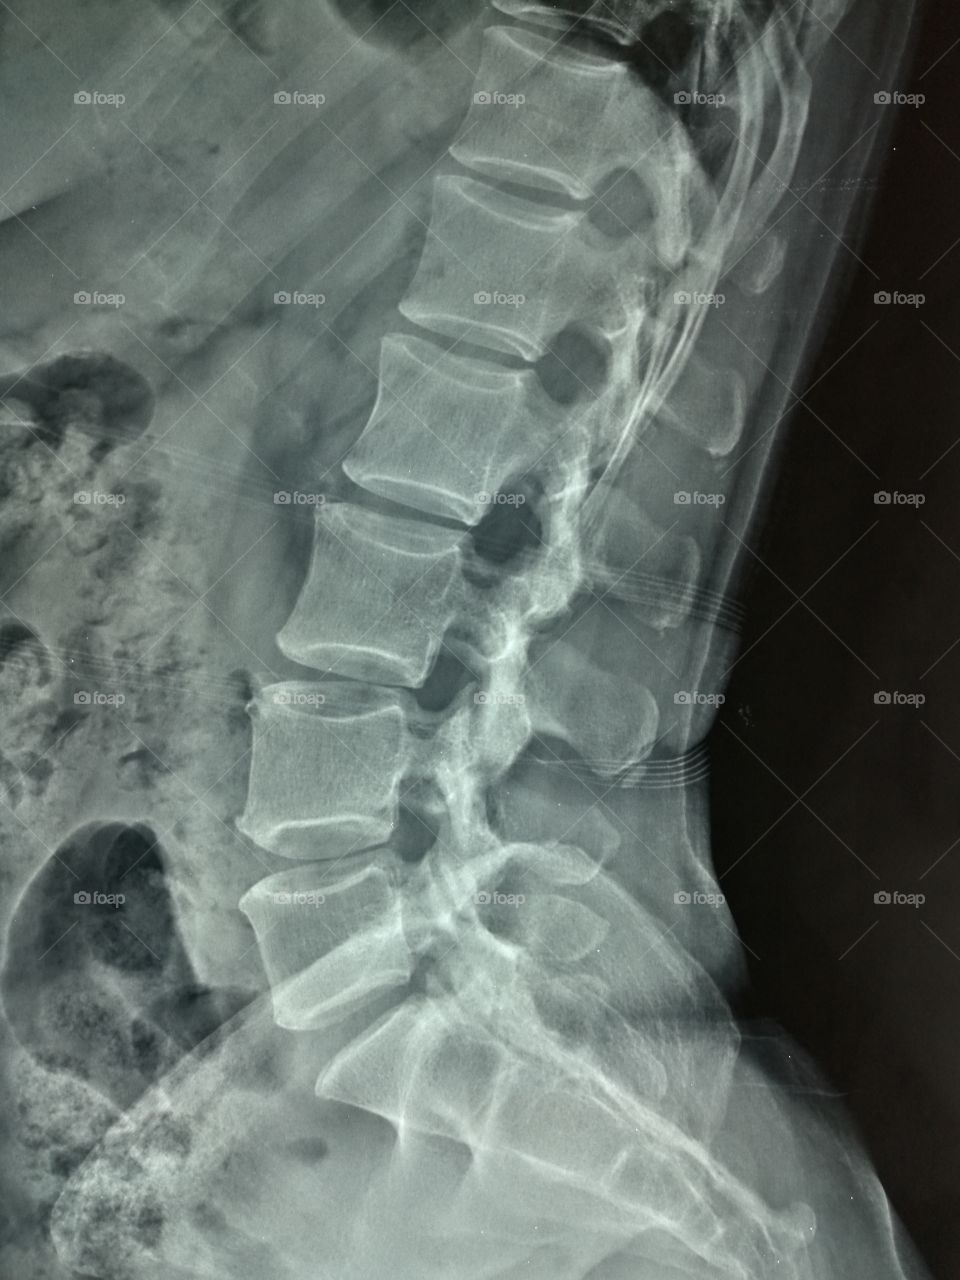 spine radiology x ray